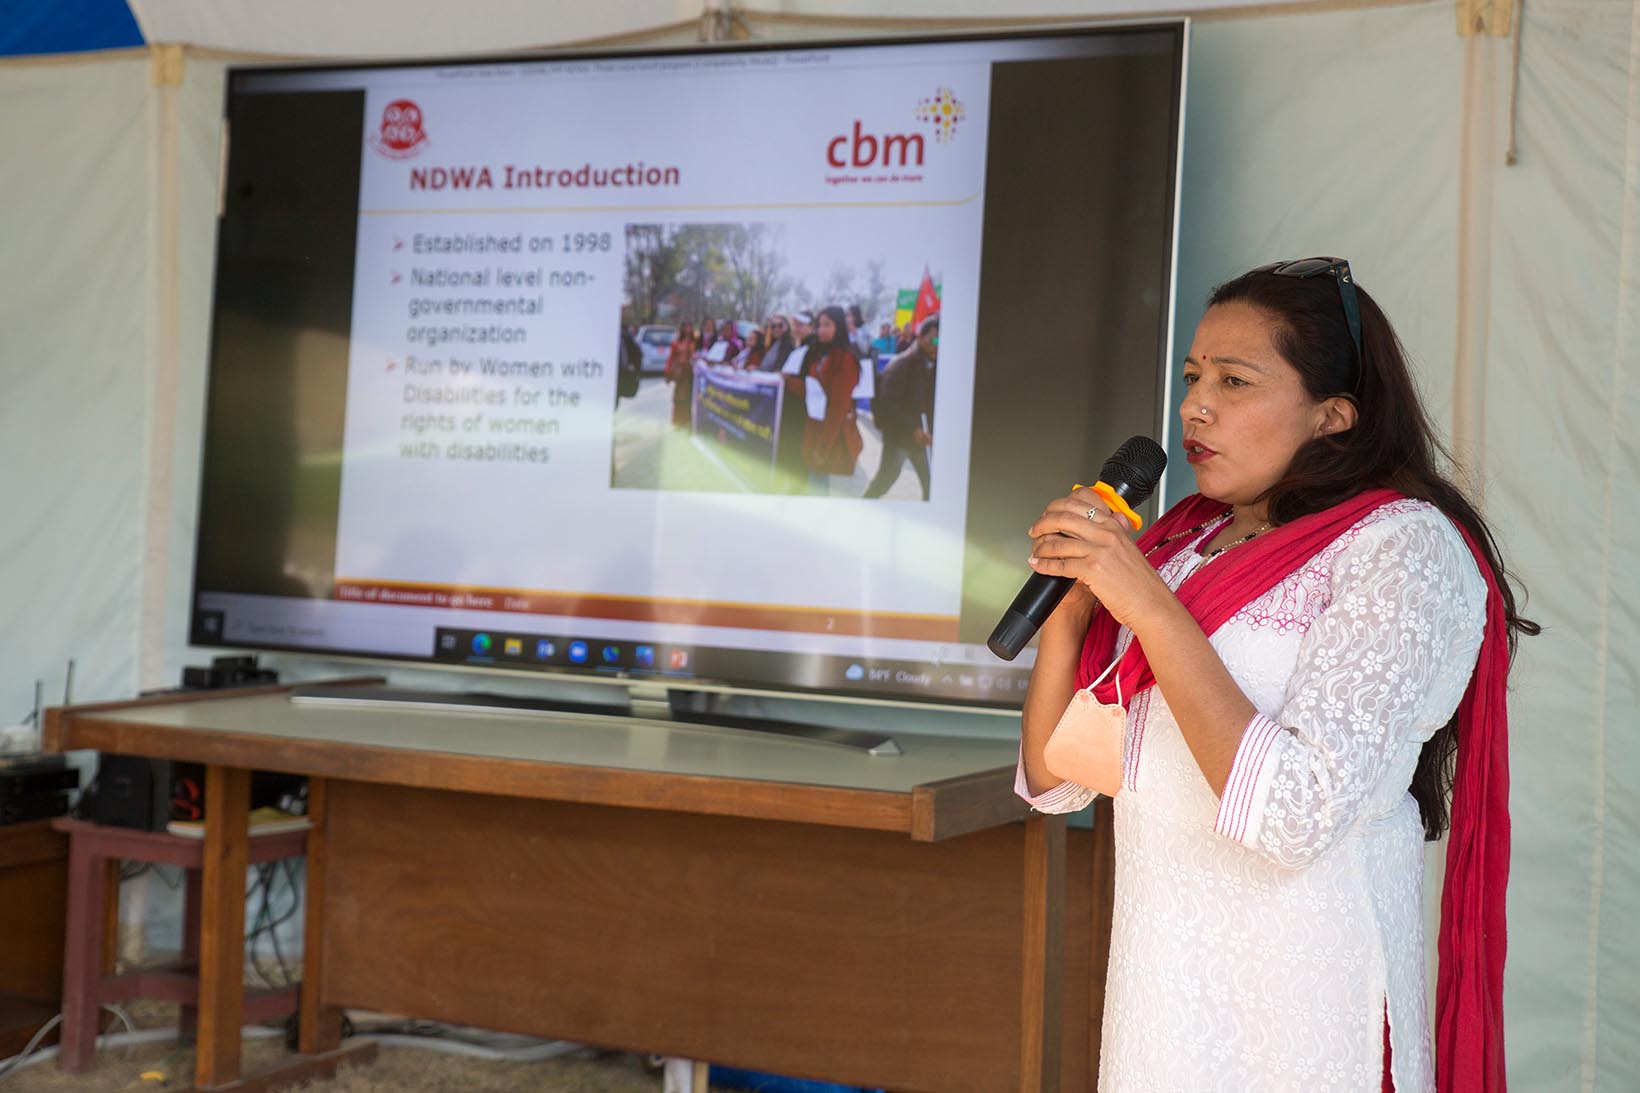 Eine Frau aus Nepal hält eine Präsentation.